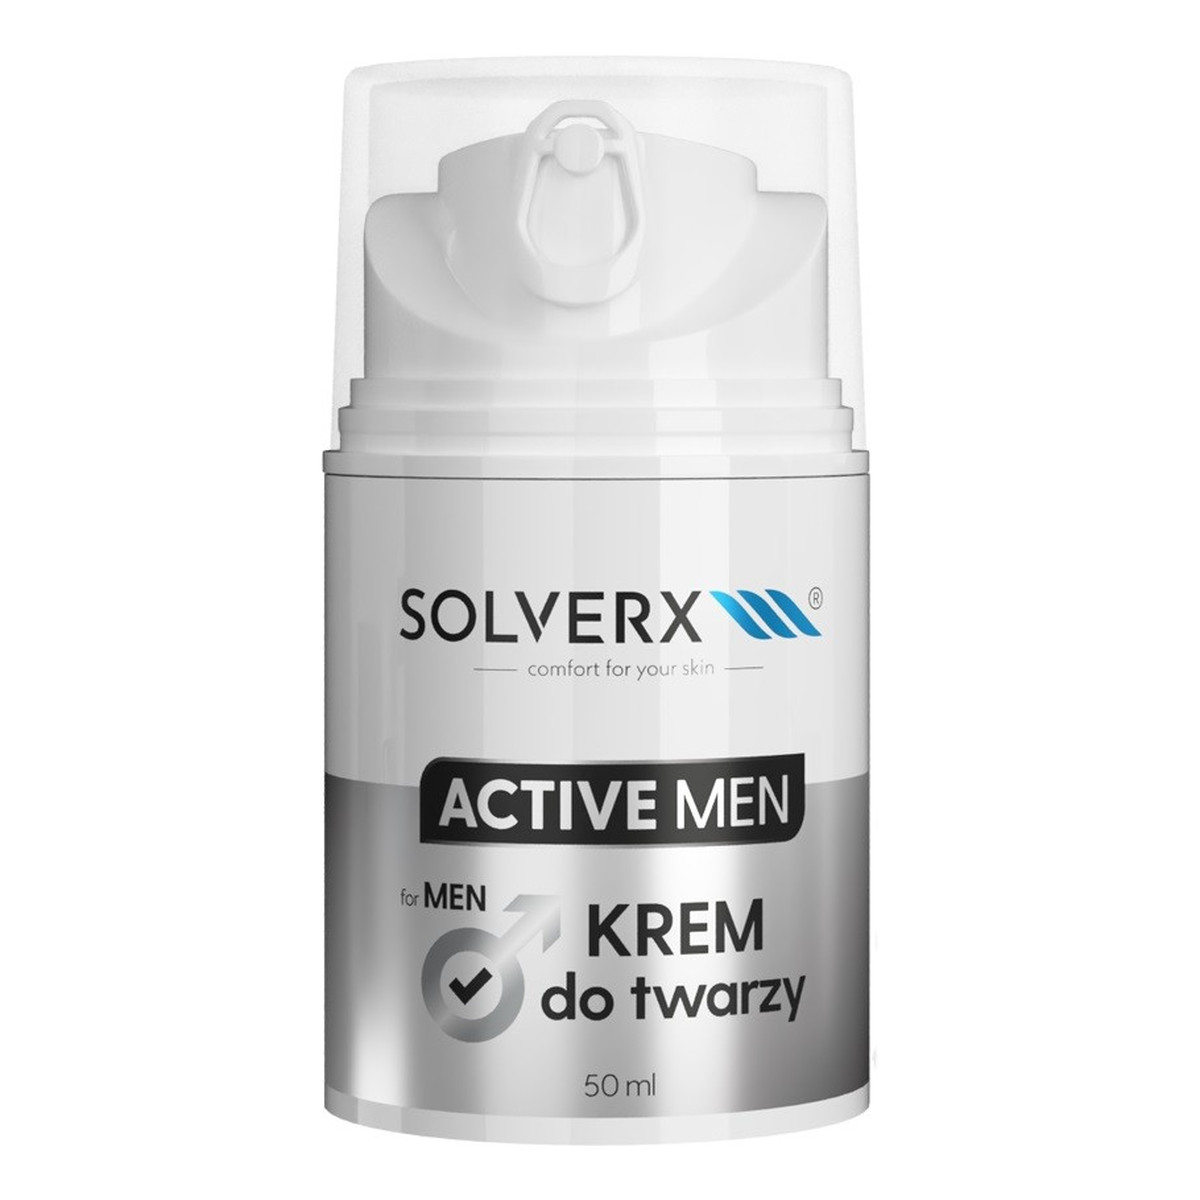 Solverx Active Men Krem do twarzy 50ml